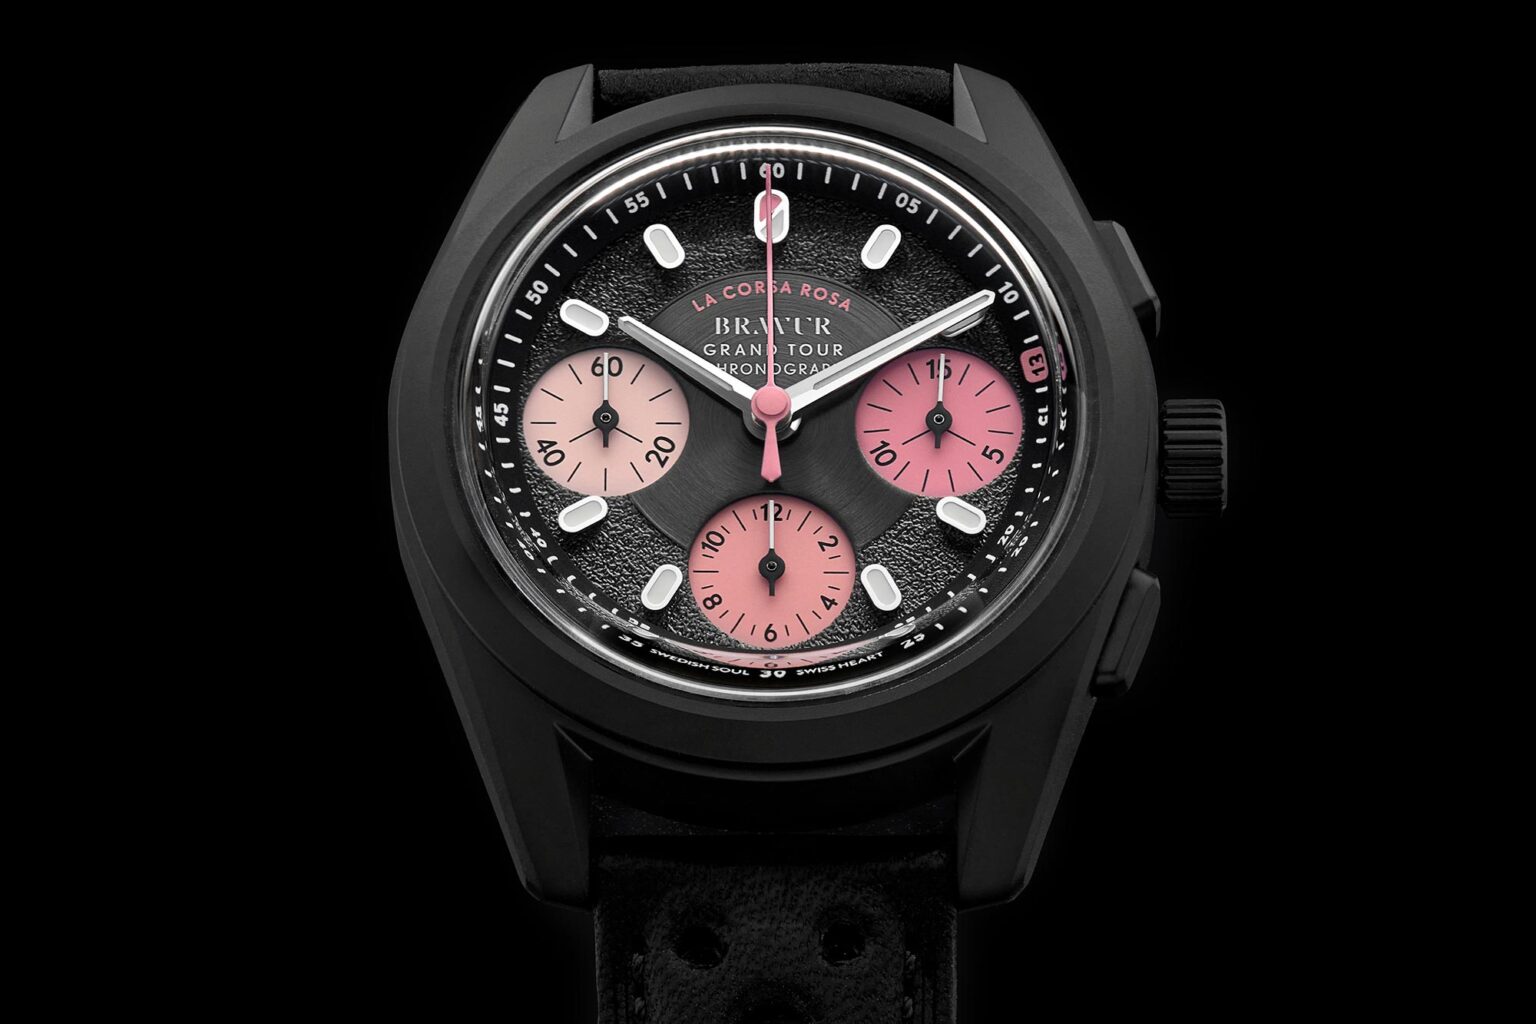 Bravur La Corsa Rosa IV luxury handmade mechanical chronograph watch celebrates Giro d'Italia, face